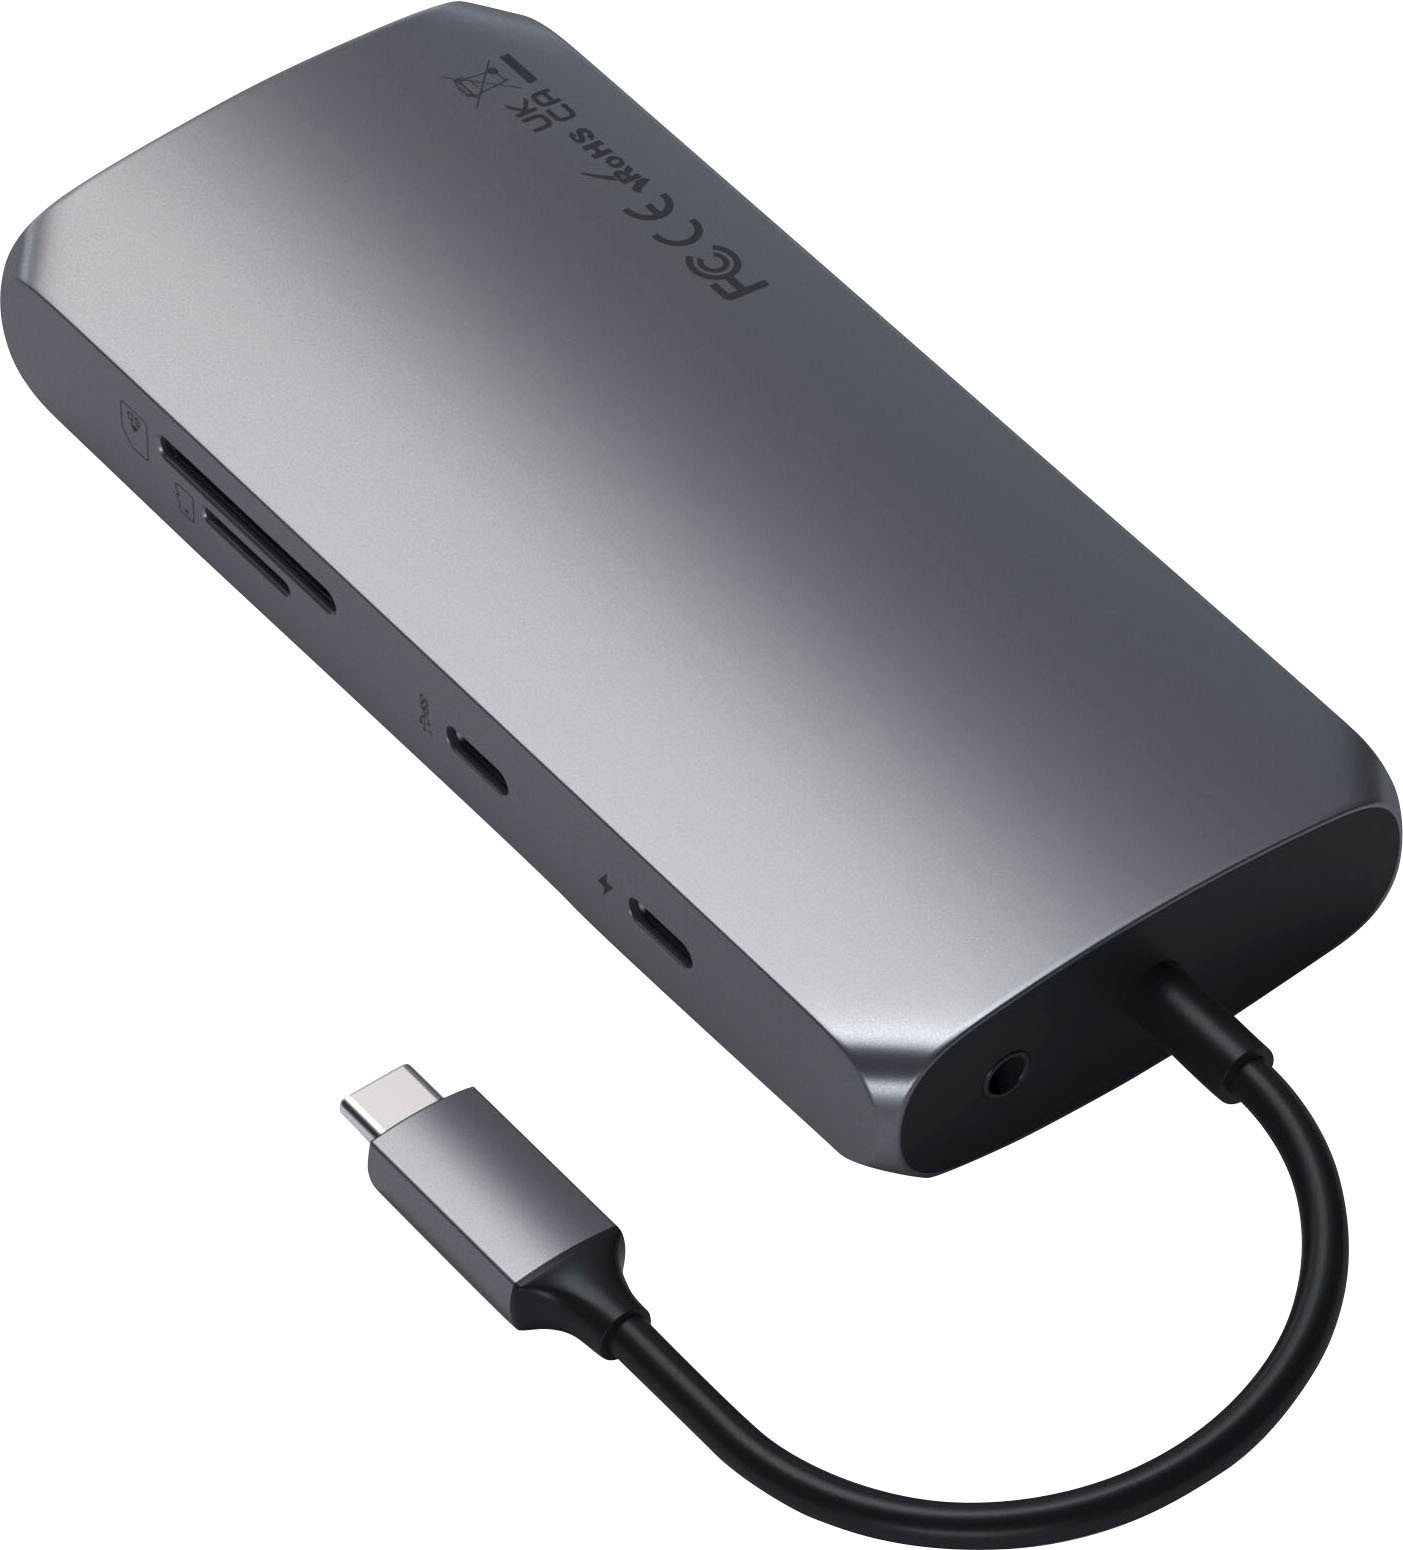 Satechi USB-Adapter »USB-C Multiport MX«, USB 3.0 Typ A-RJ-45 (Ethernet) zu USB Typ C